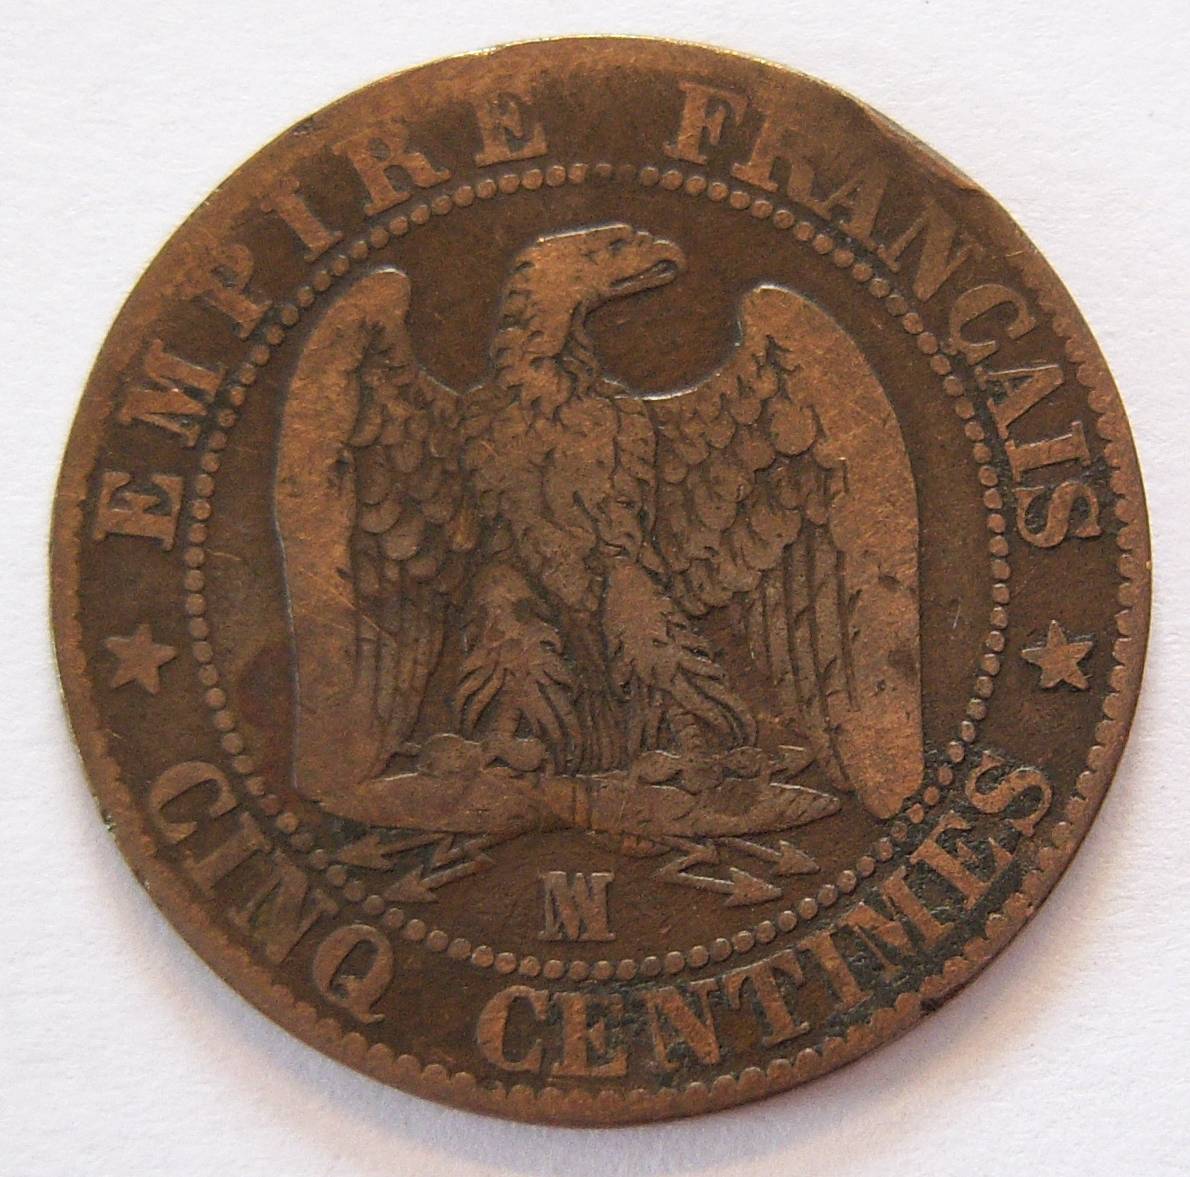  Frankreich Cinq 5 Centimes 1855 MA   